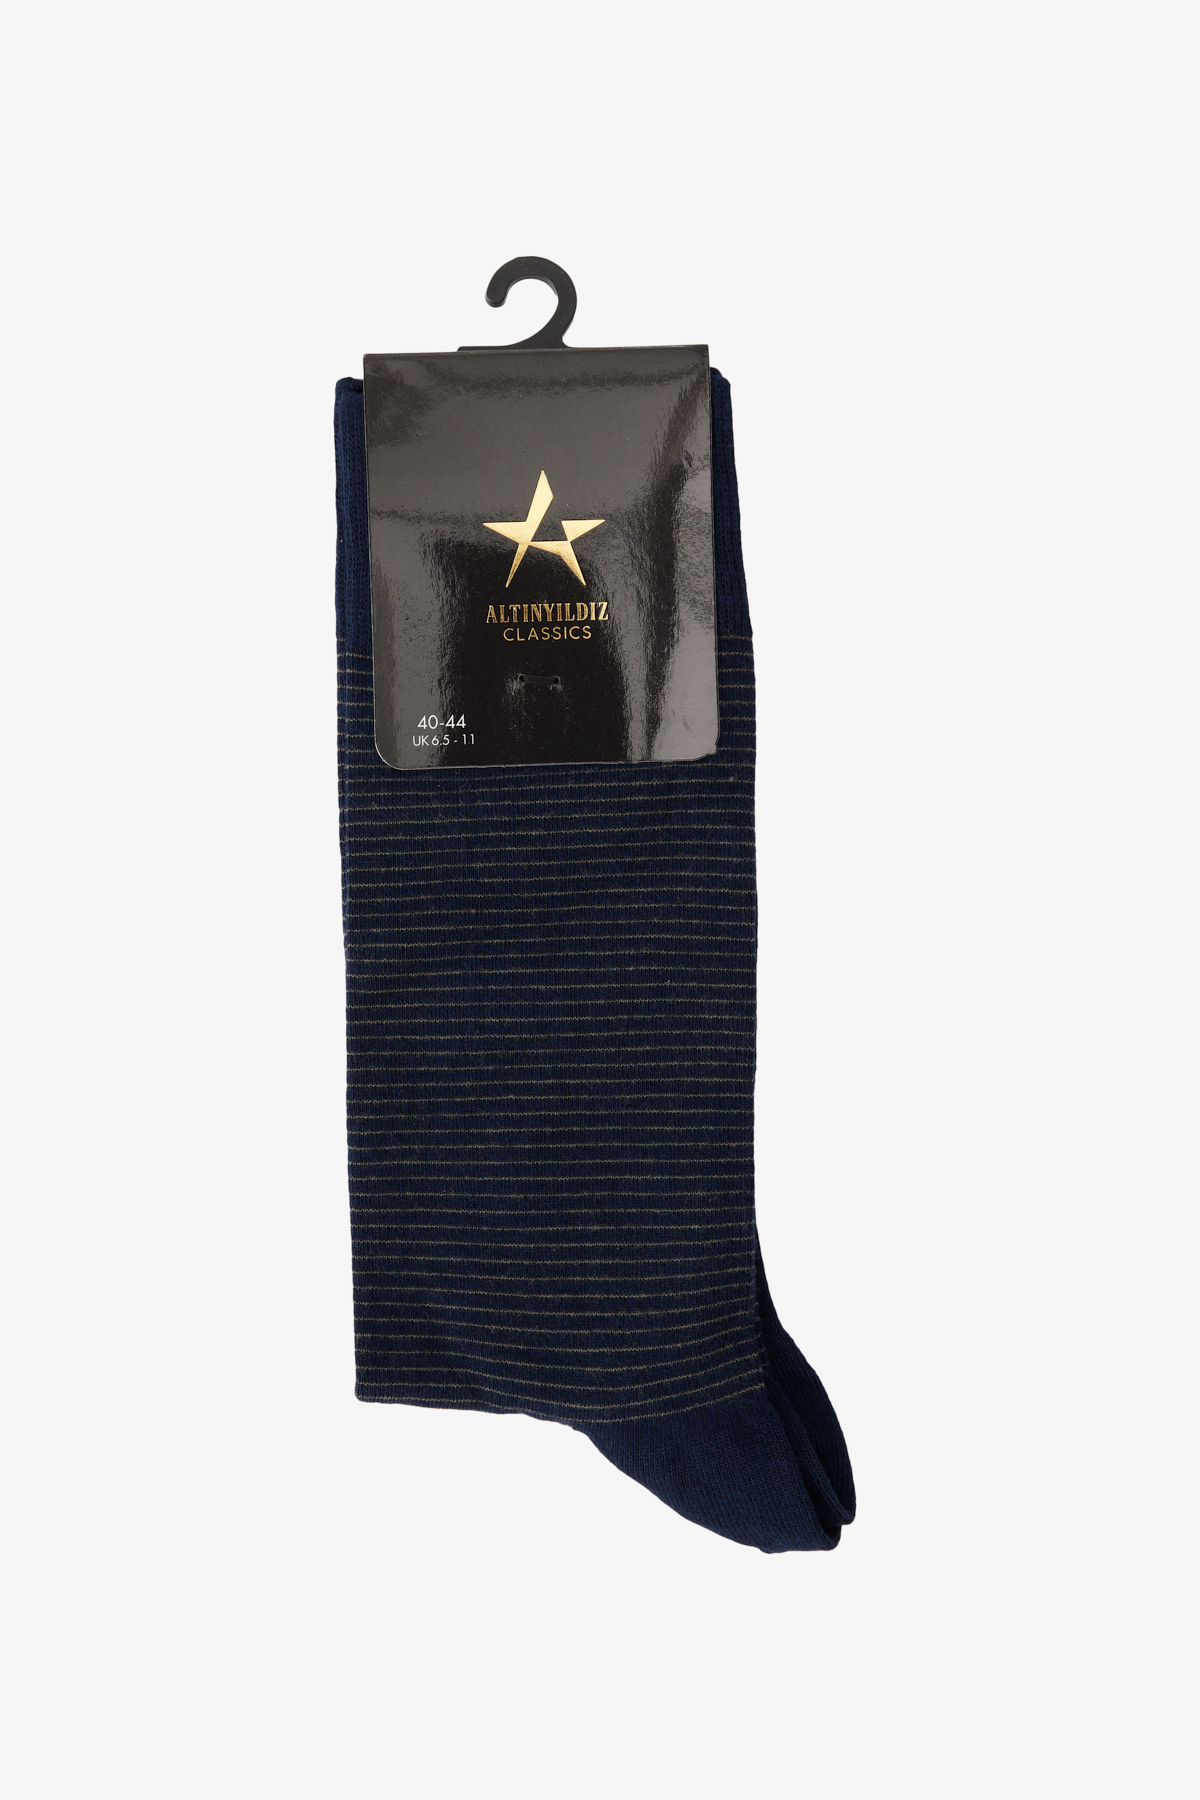 ALTINYILDIZ CLASSICS Men's Navy Blue-Khaki Patterned Bamboo Cleat Socks